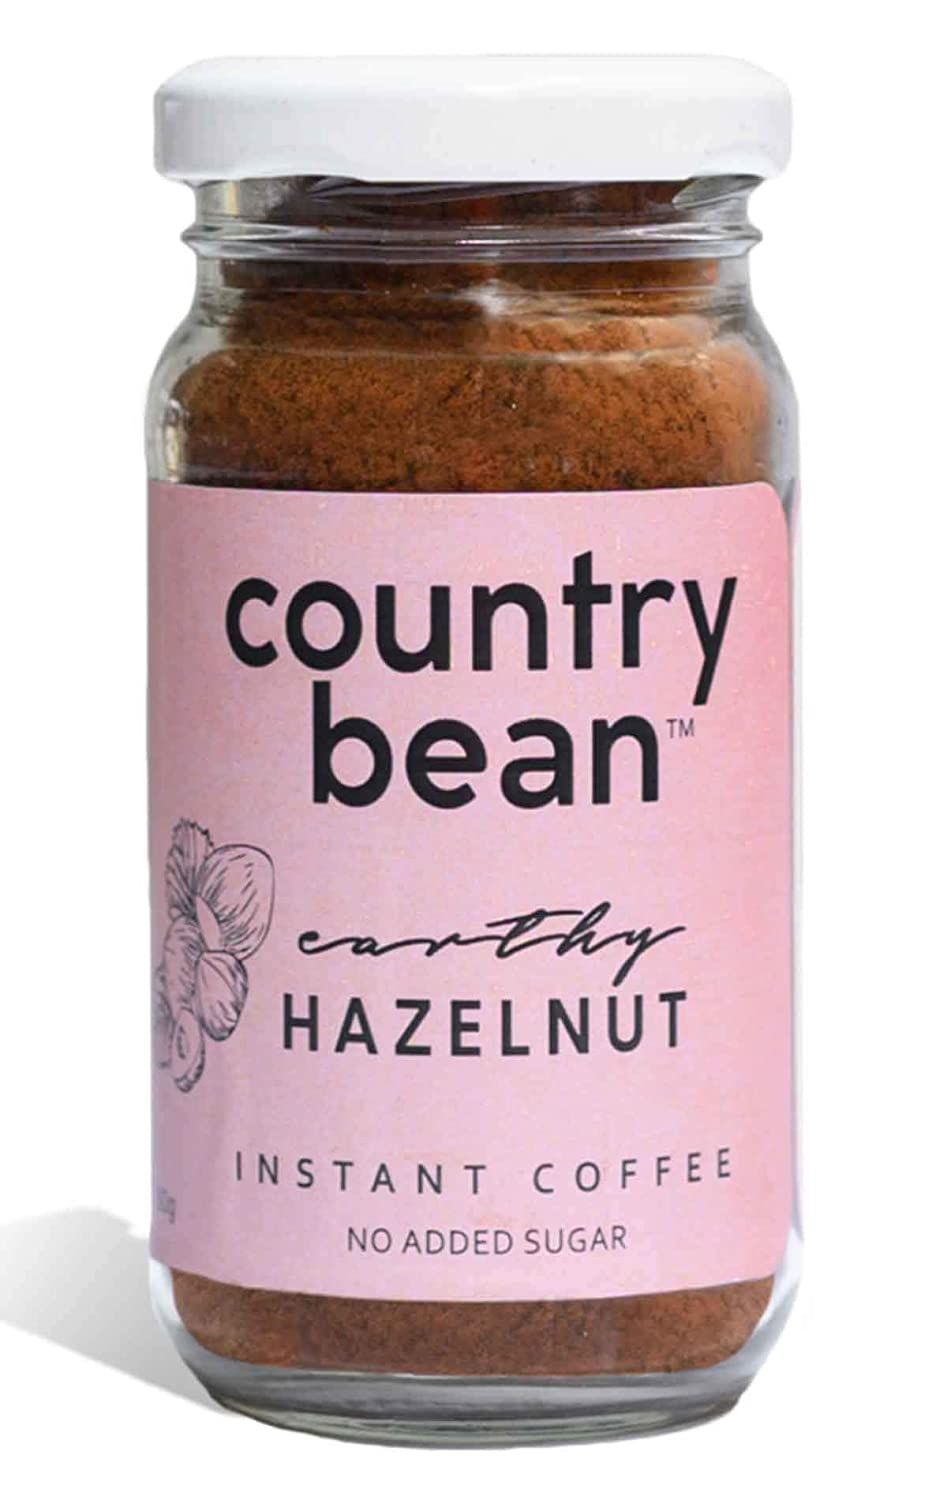 Country Bean Hazelnut Coffee Powder Image